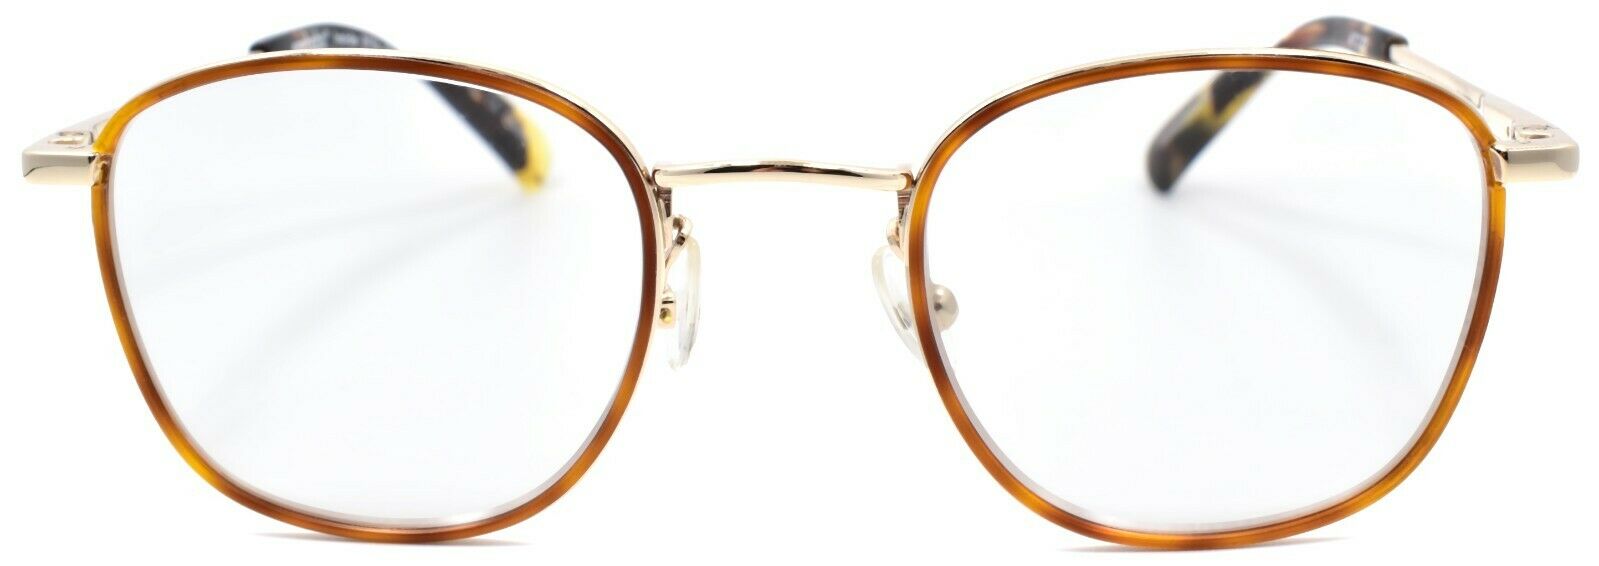 2-Eyebobs Inside 3174 06 Unisex Reading Glasses Orange Tortoise / Gold +3.00-842754169646-IKSpecs